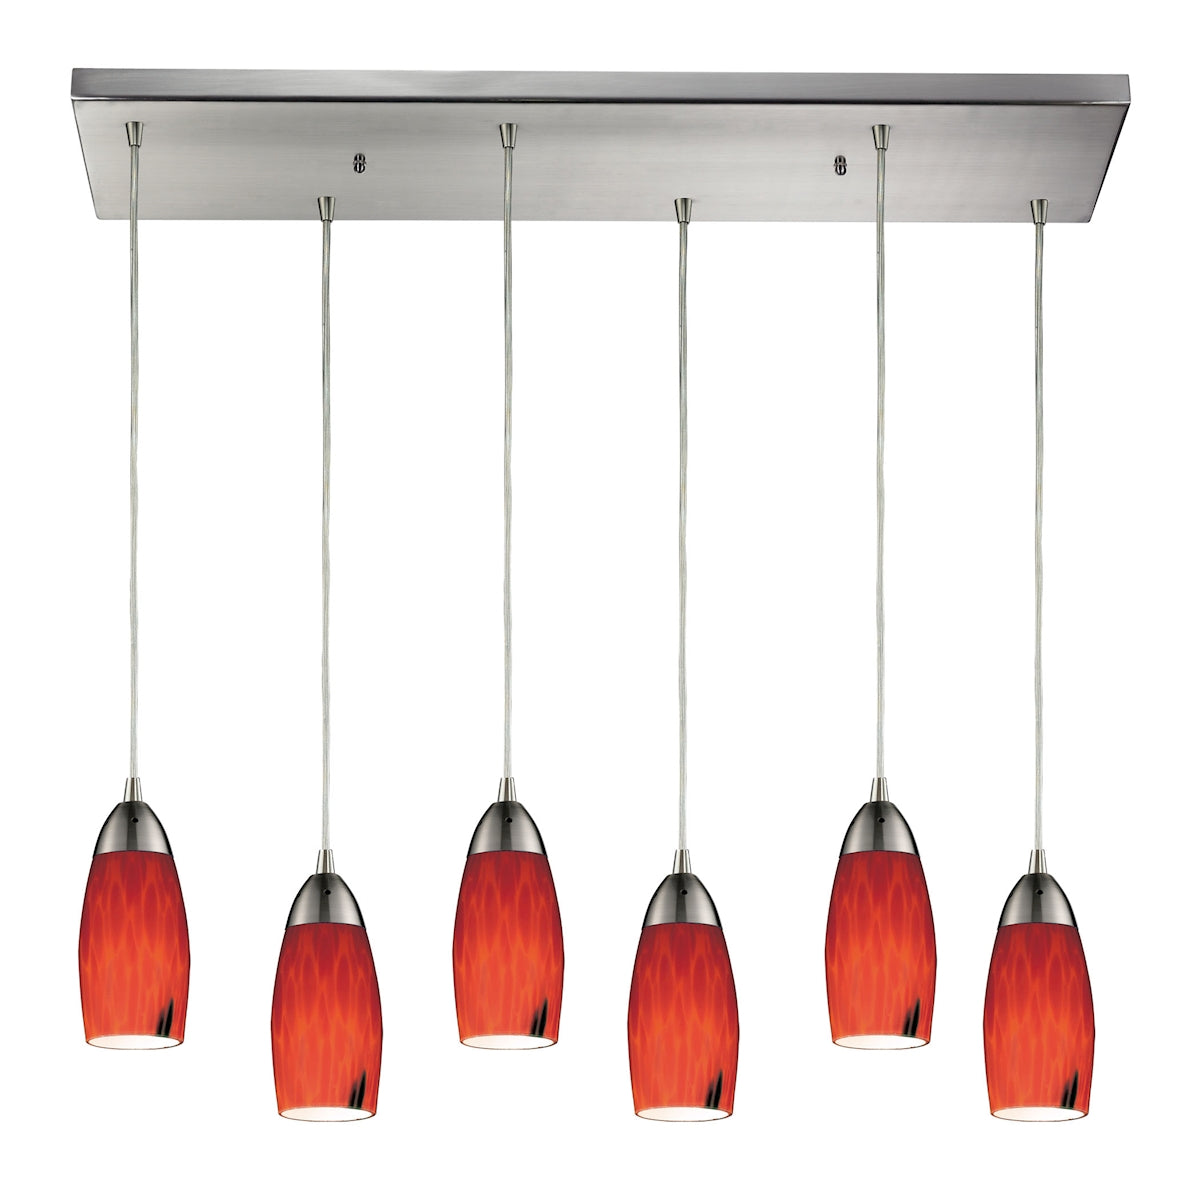 ELK Lighting 110-6RC-FR Milan 6-Light Rectangular Pendant Fixture in Satin Nickel with Fire Red Glass